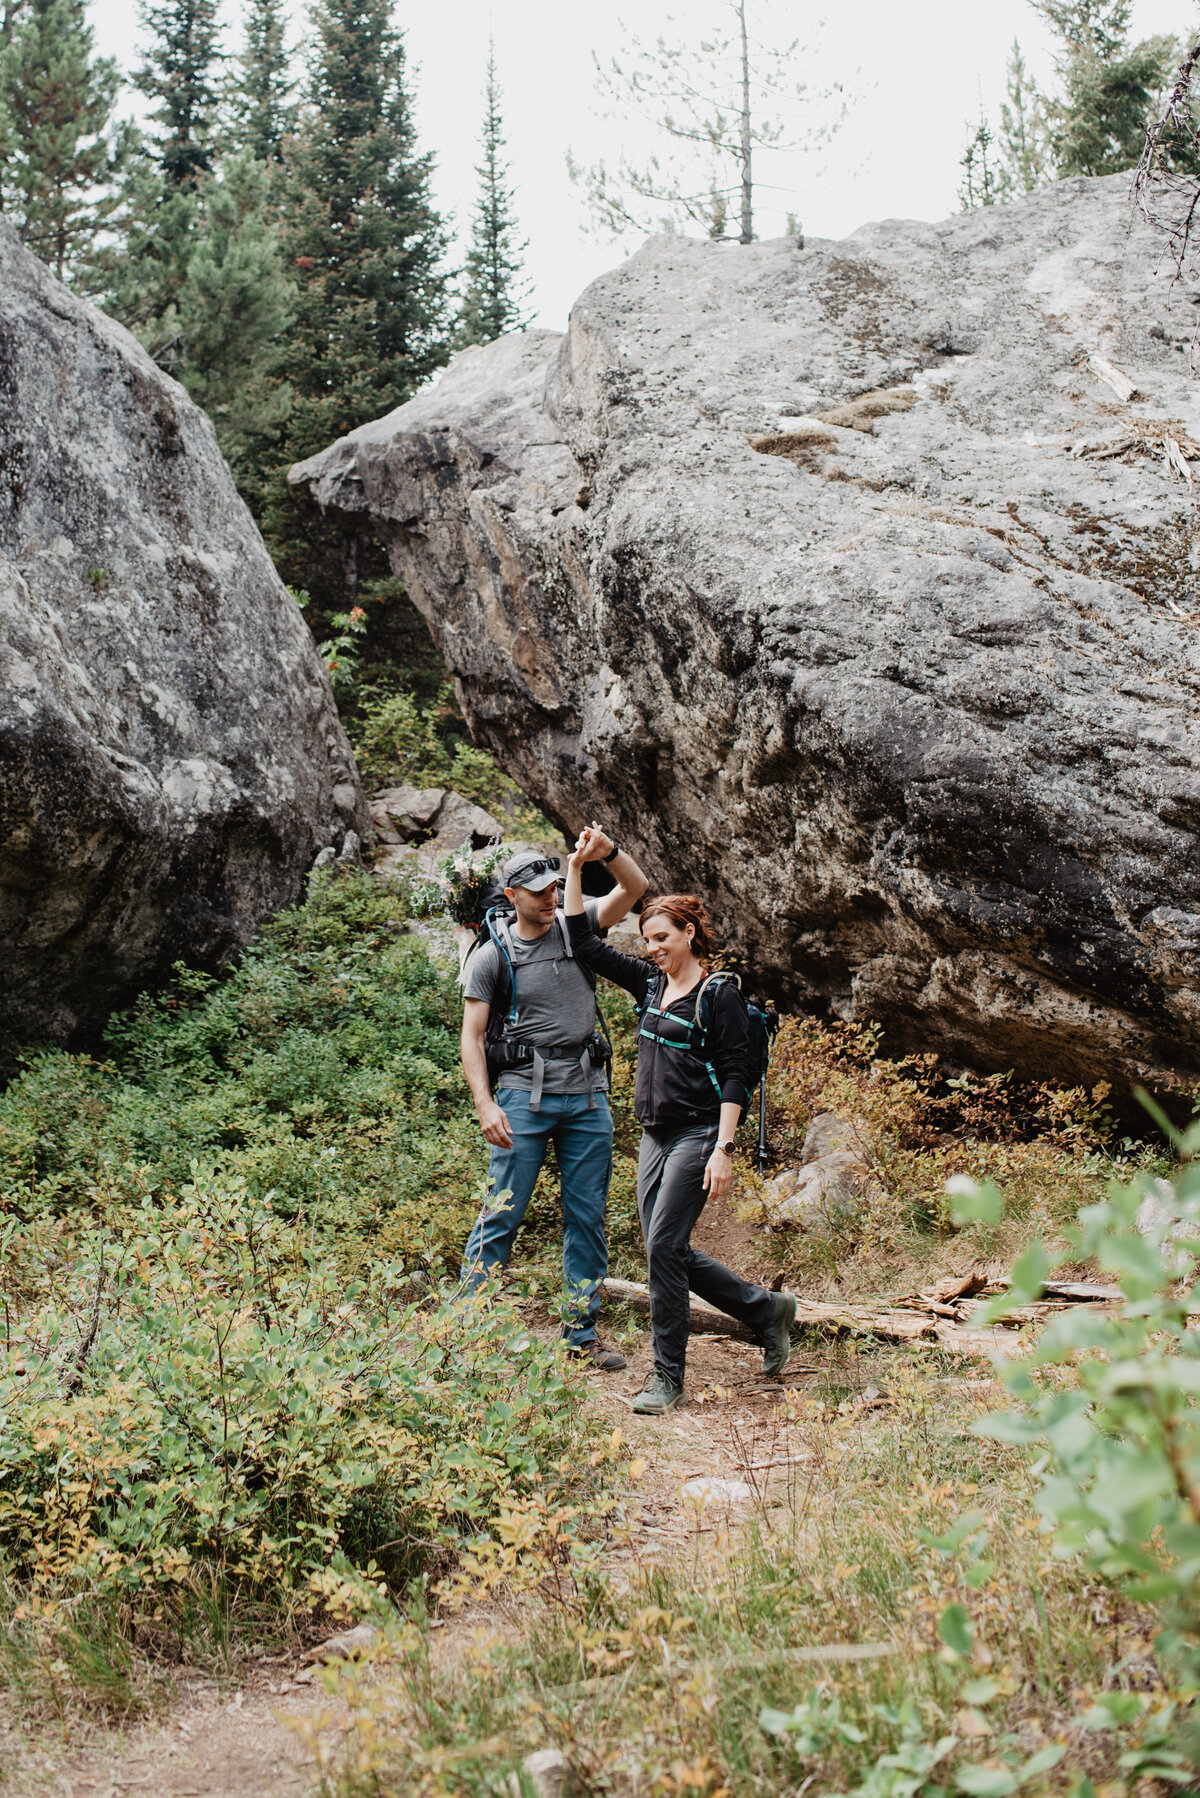 Jackson Hole photographers capture man helping woman through hike